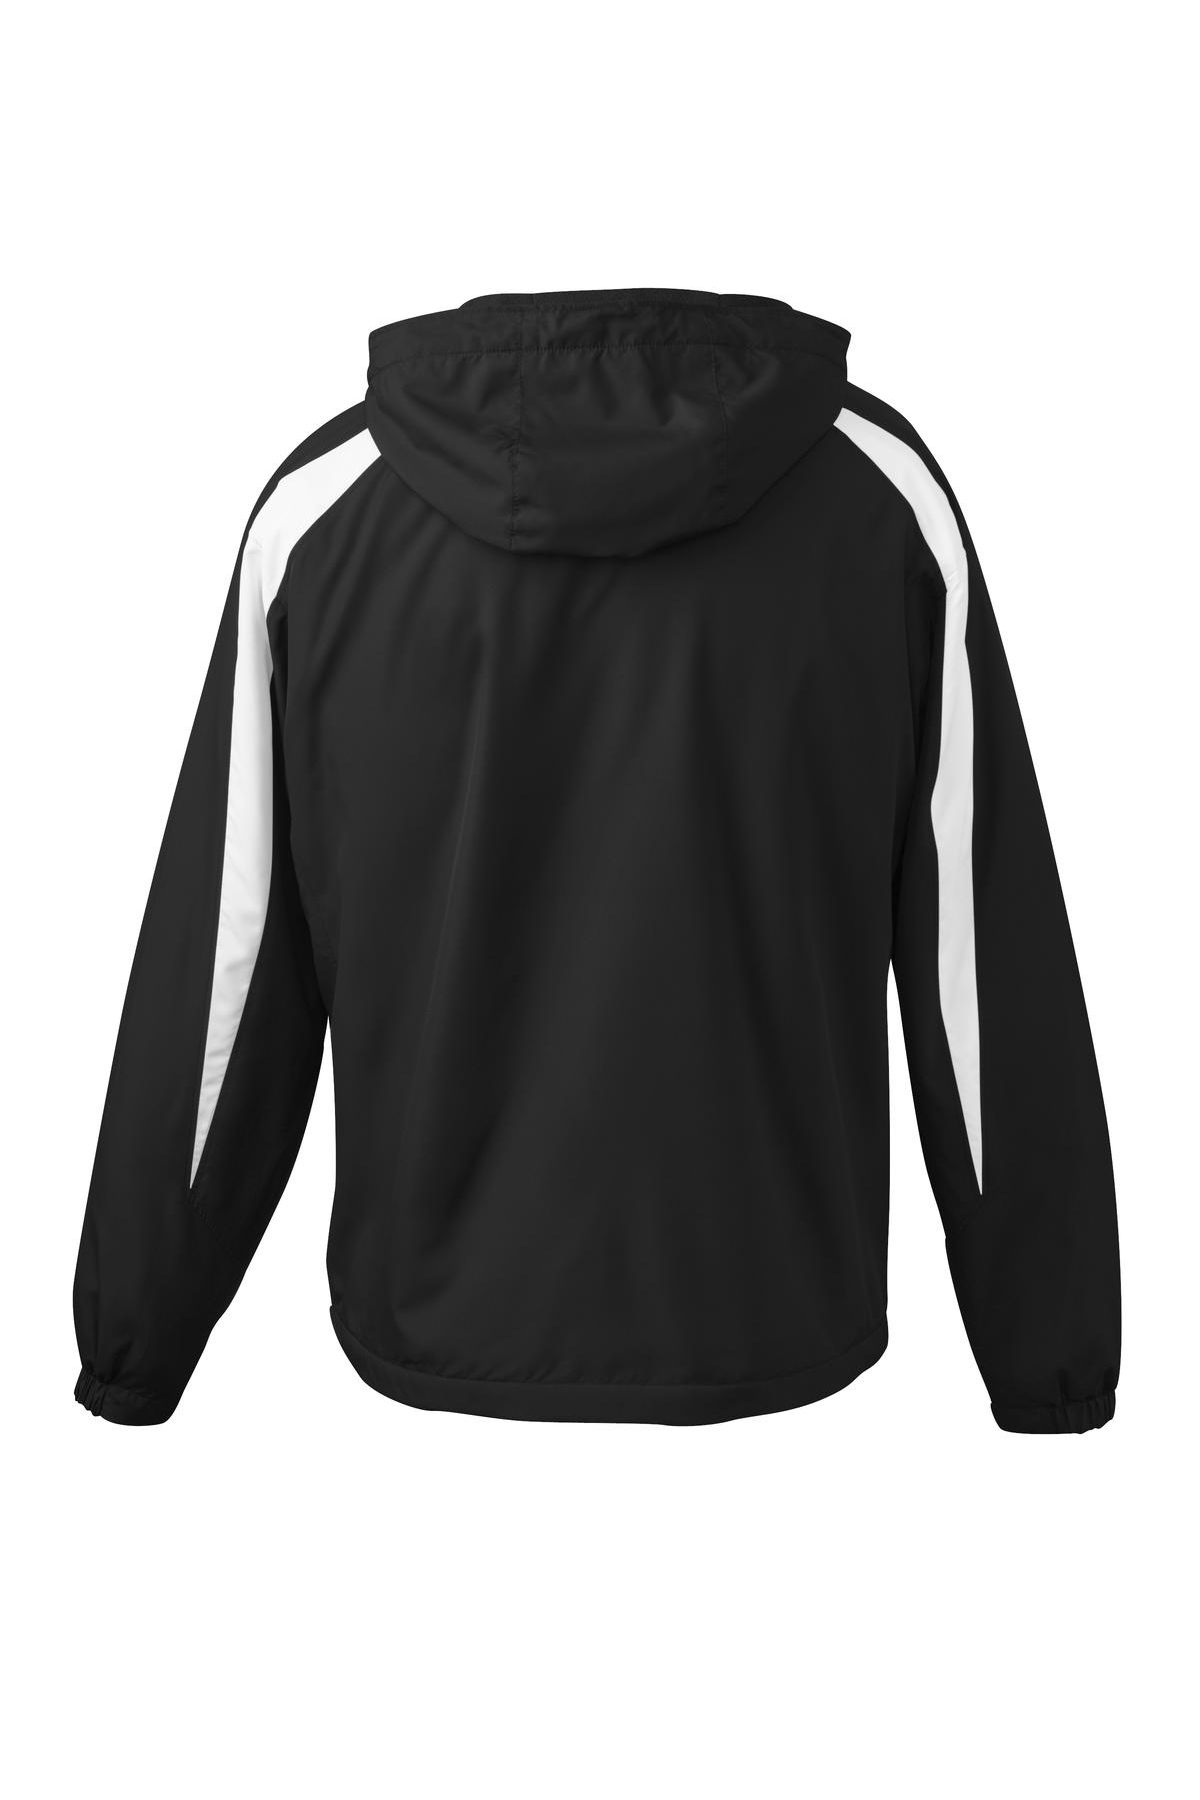 Sport-Tek Youth Fleece-Lined Hooded Colorblock Jacket YST81 Black/White